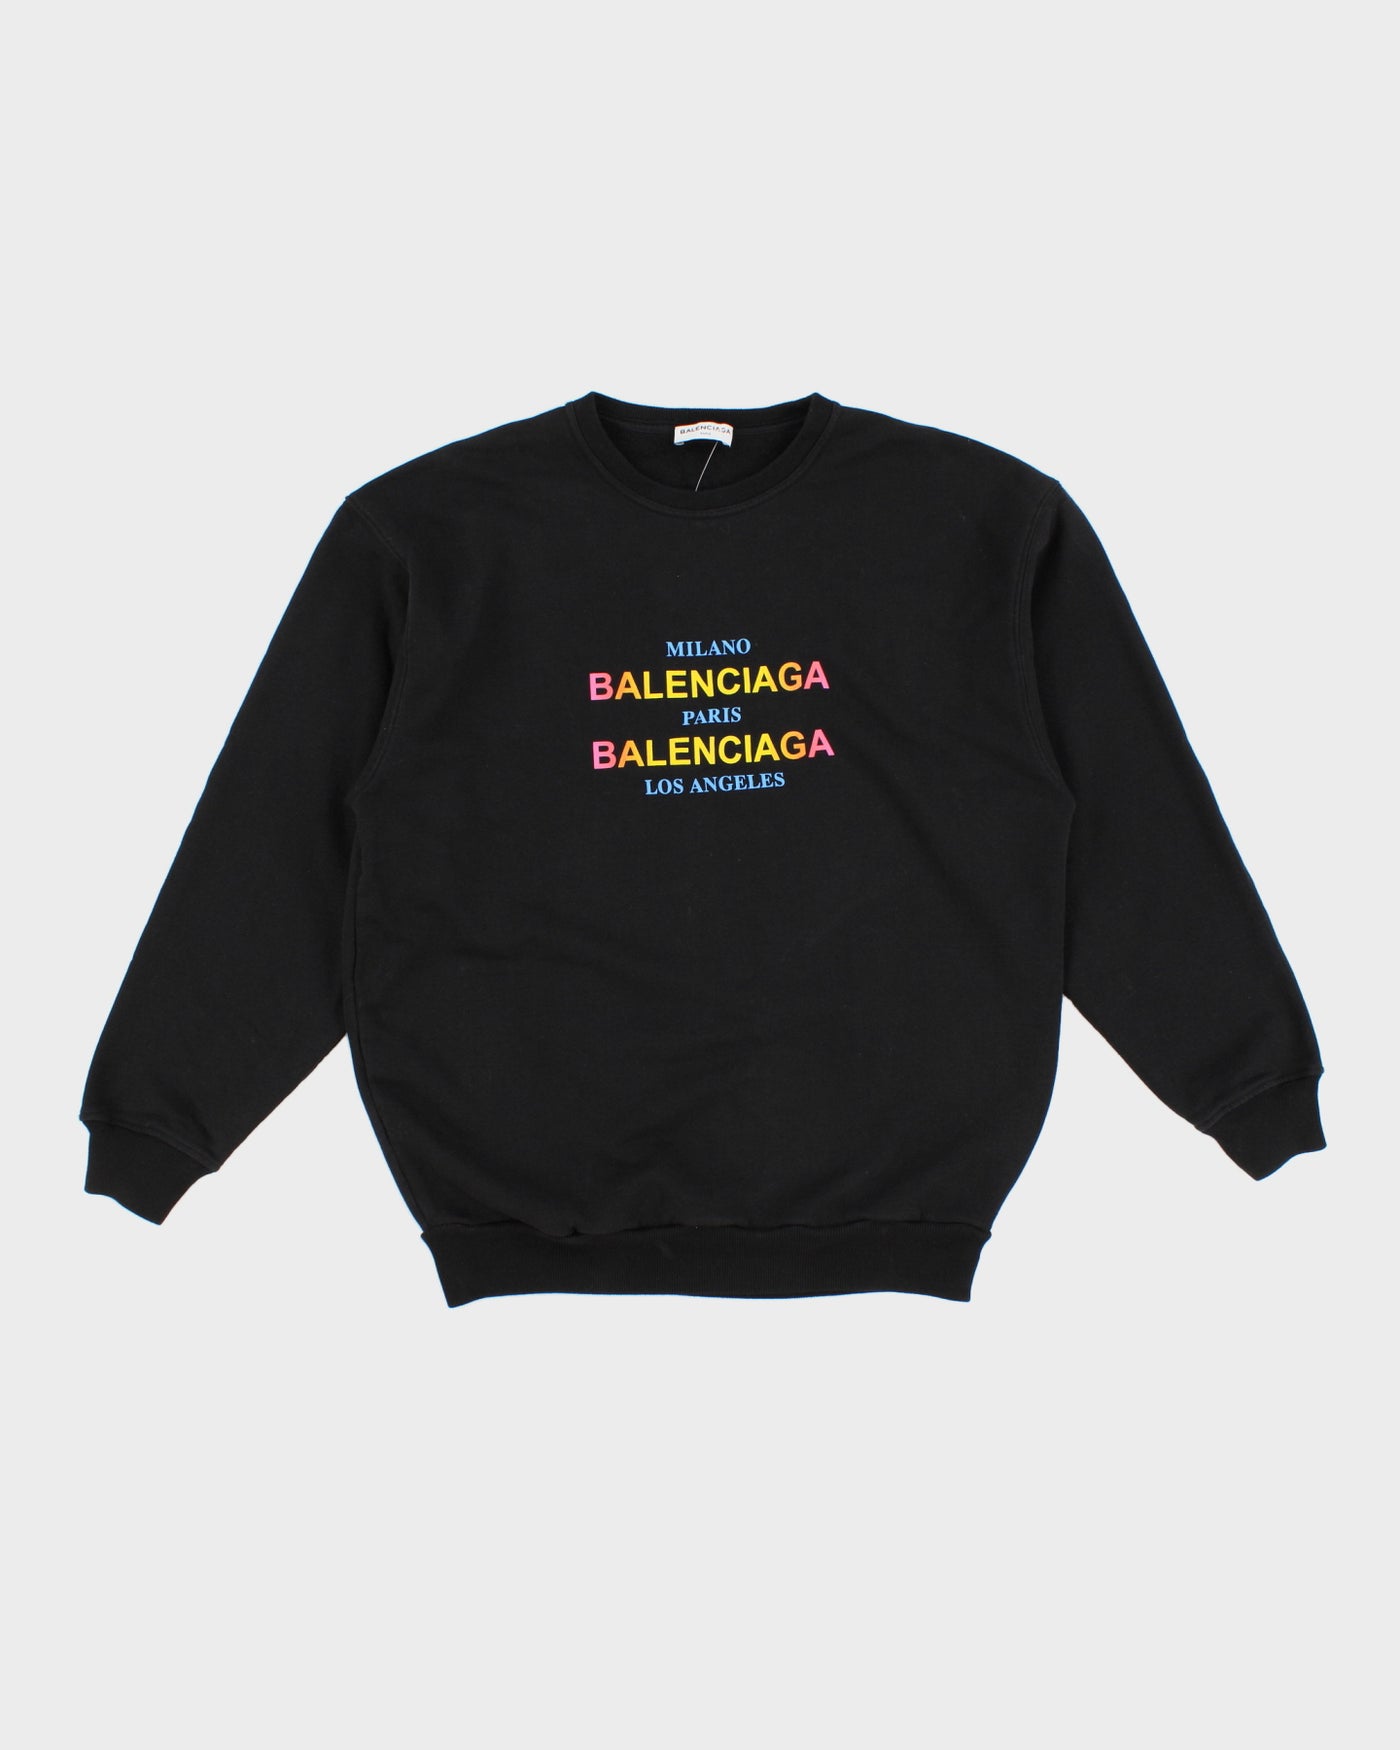 Balenciaga Rainbow Milano Paris Los Angeles Sweatshirt – M – Rokit